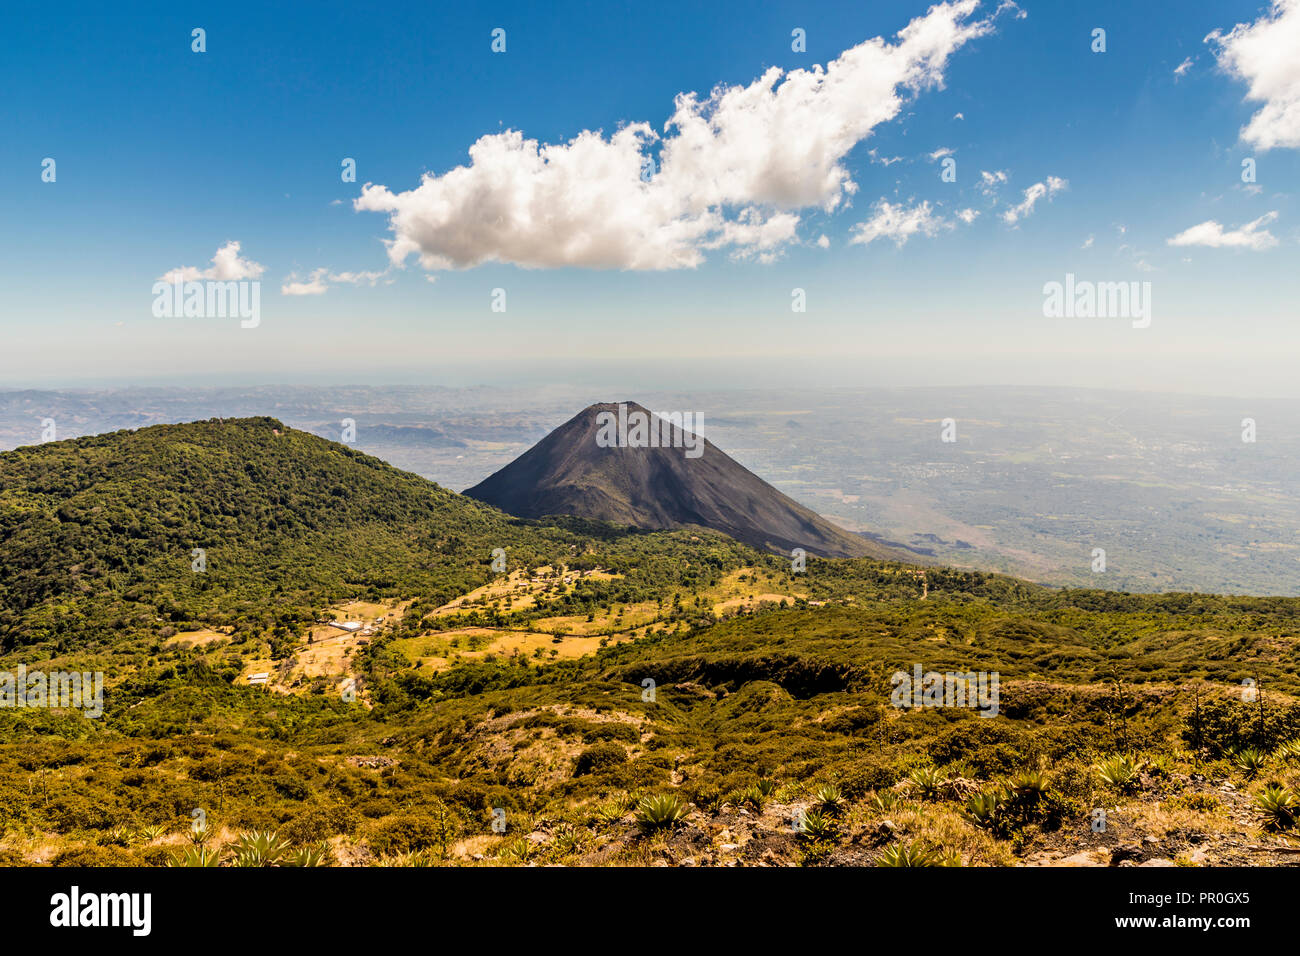 The view of Volcano Izalco from Volcano Santa Ana, Santa Ana, El Salvador, Central America Stock Photo